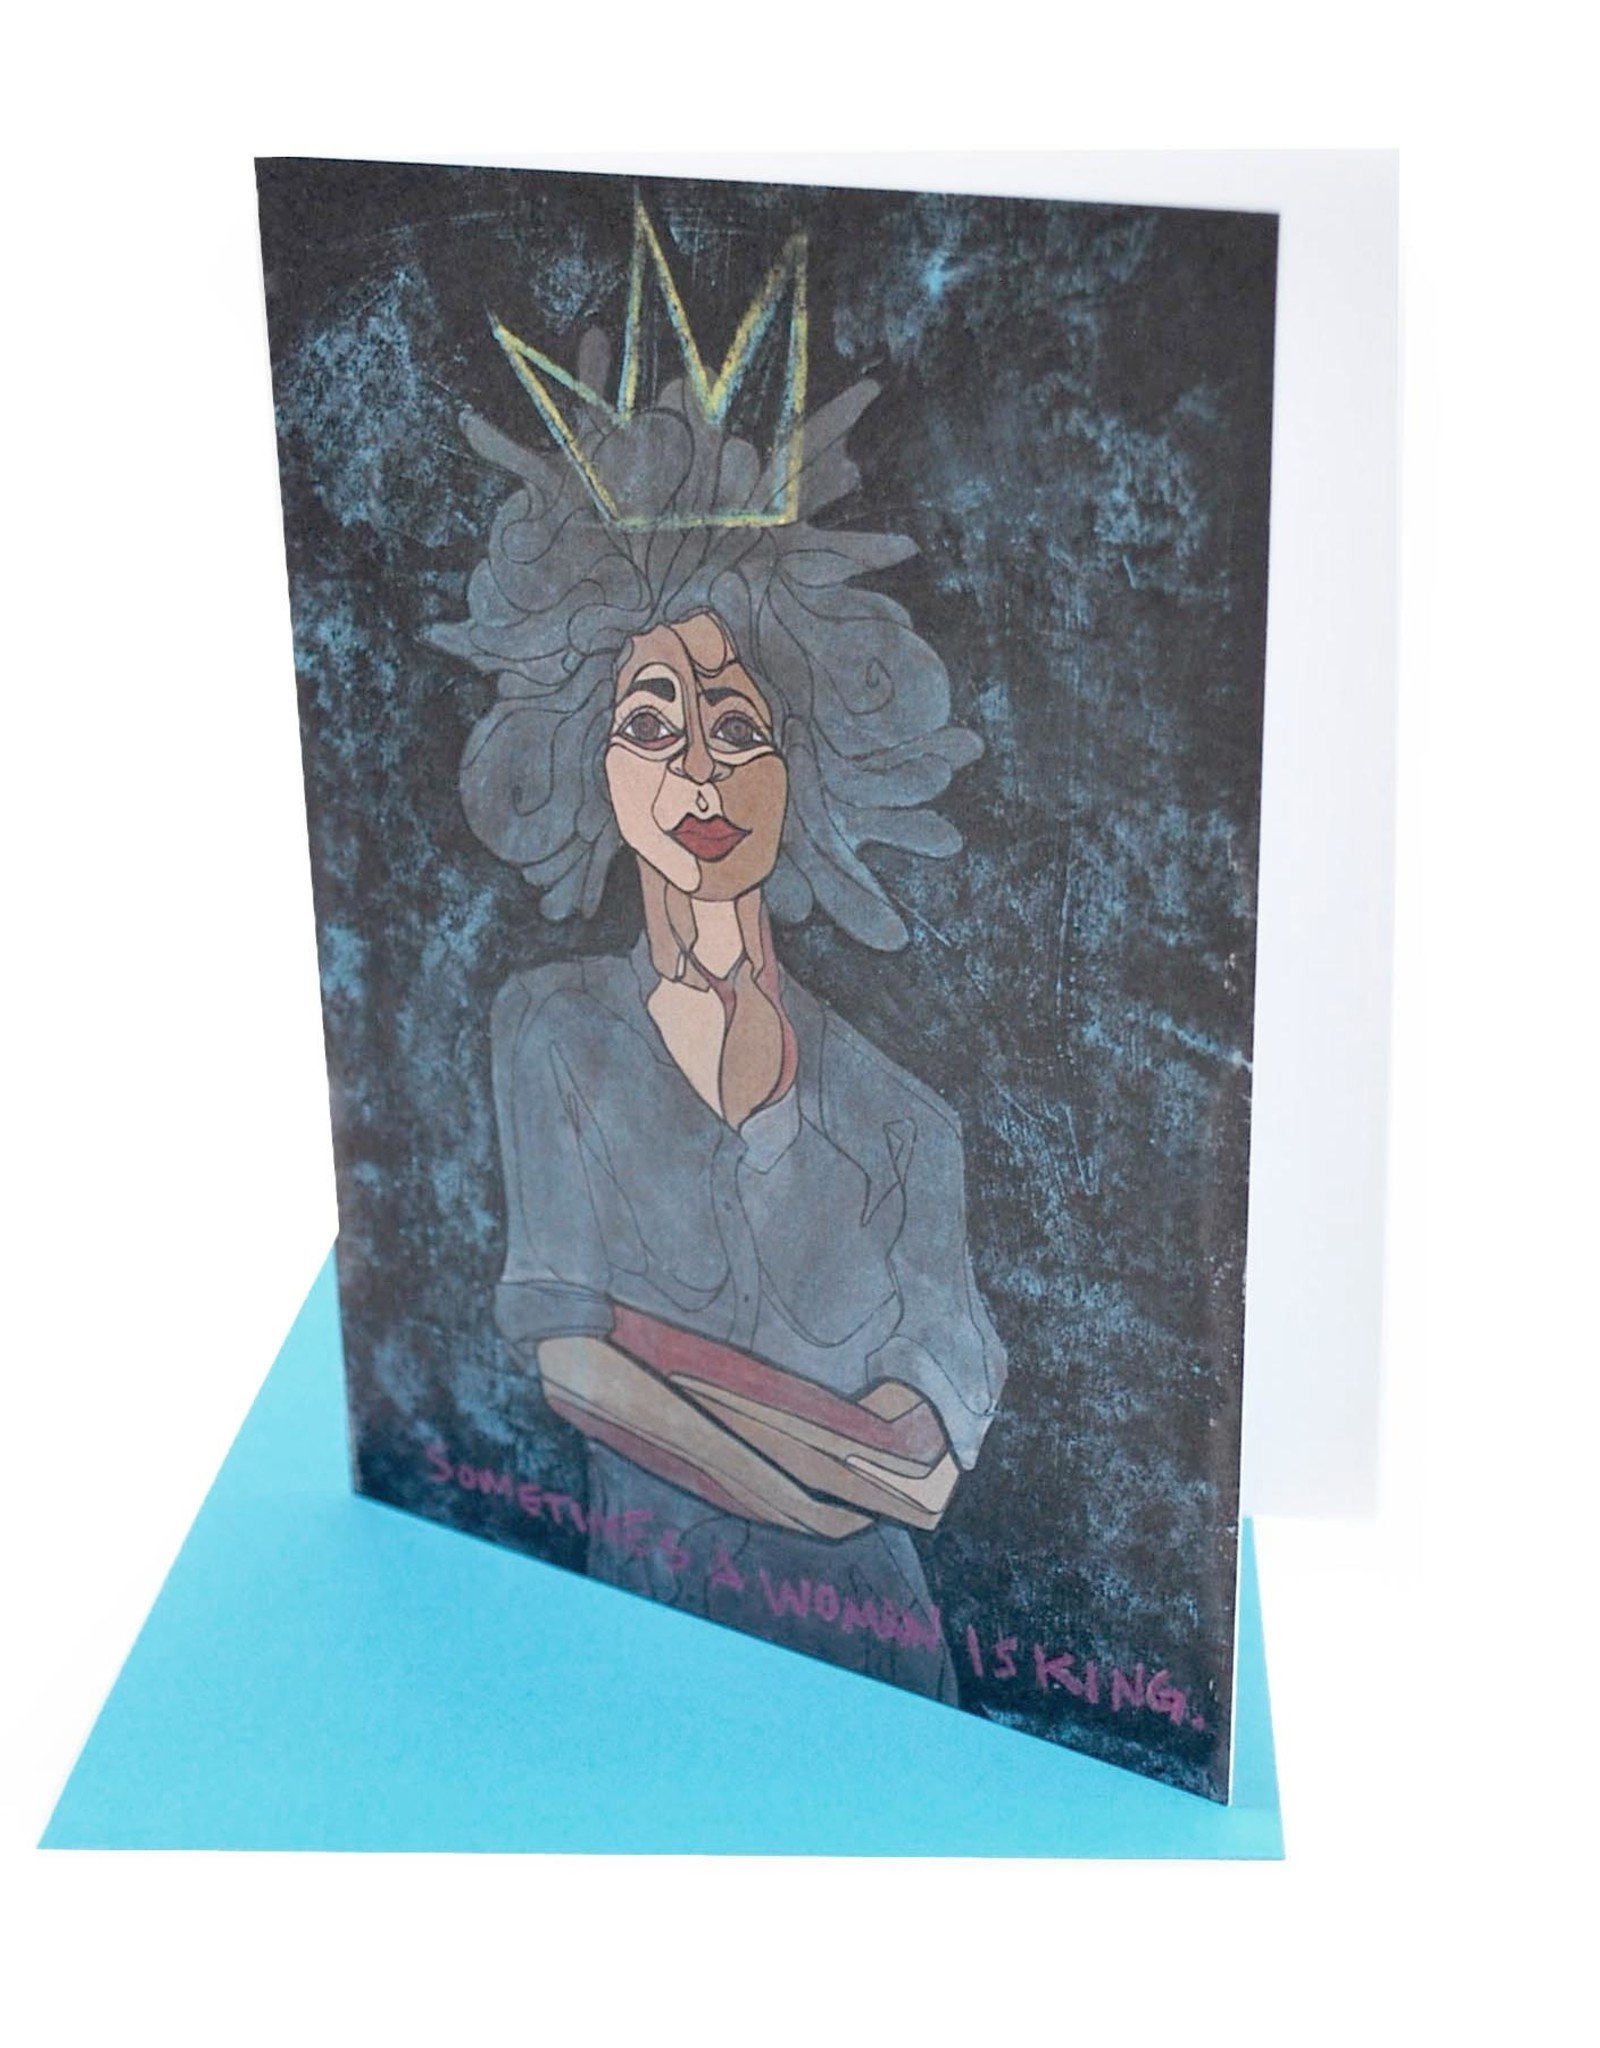 Sam Kirk “Sometimes a Woman is King” Greeting Card by Sam Kirk